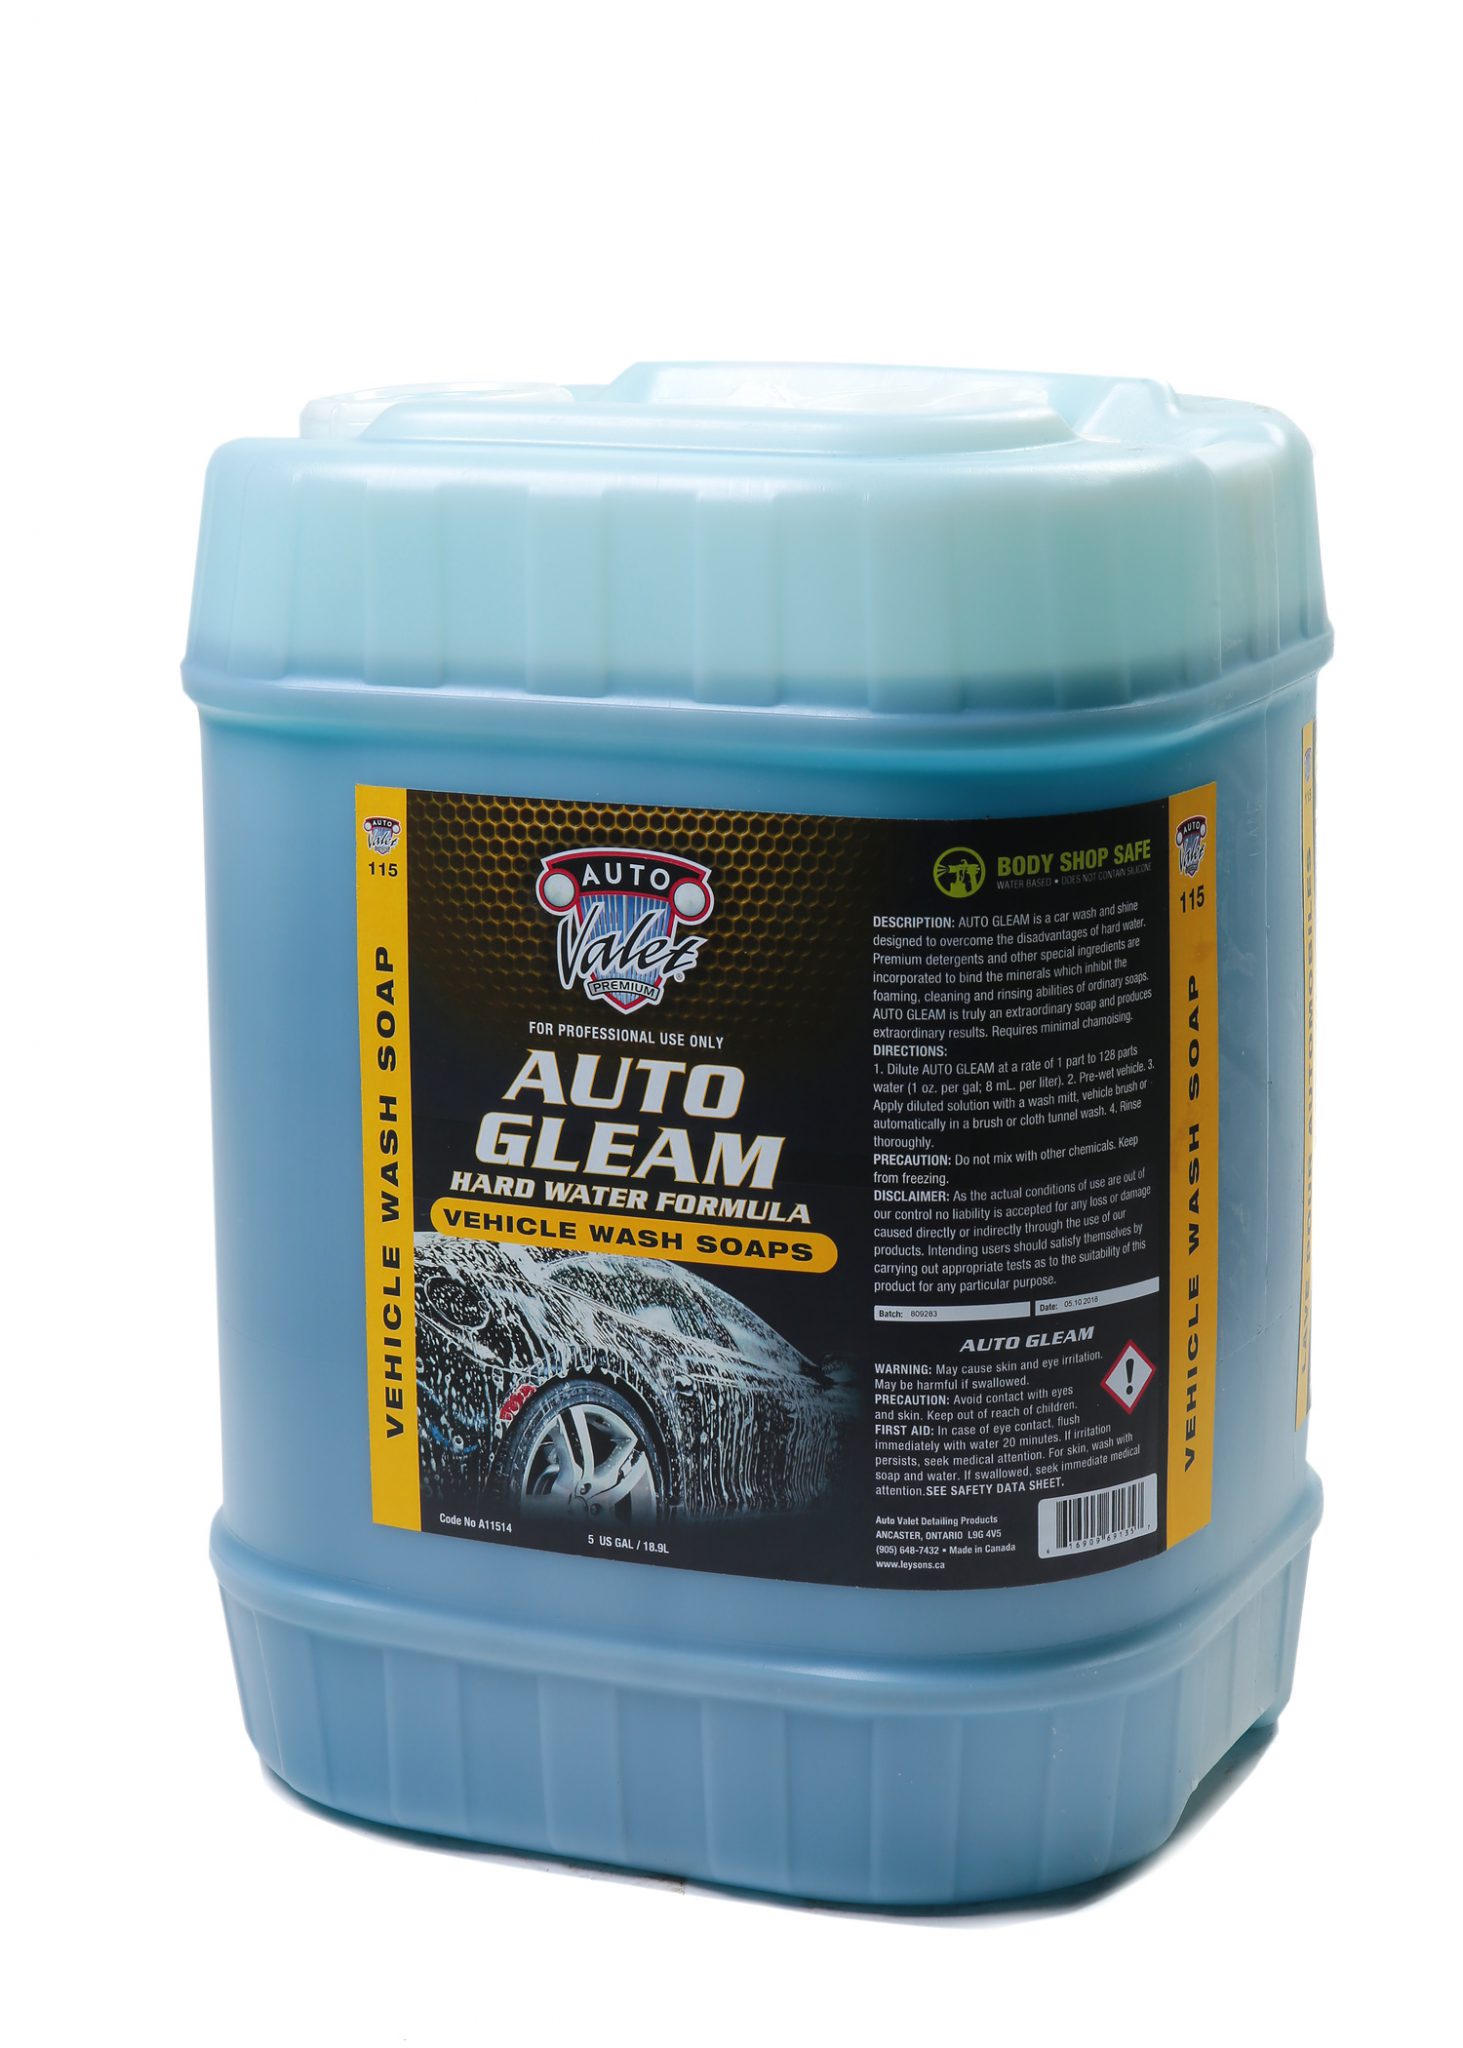 AV - AUTO GLEAM CAR WASH & SHINE - 18,9 L - Checkers Cleaning Supply